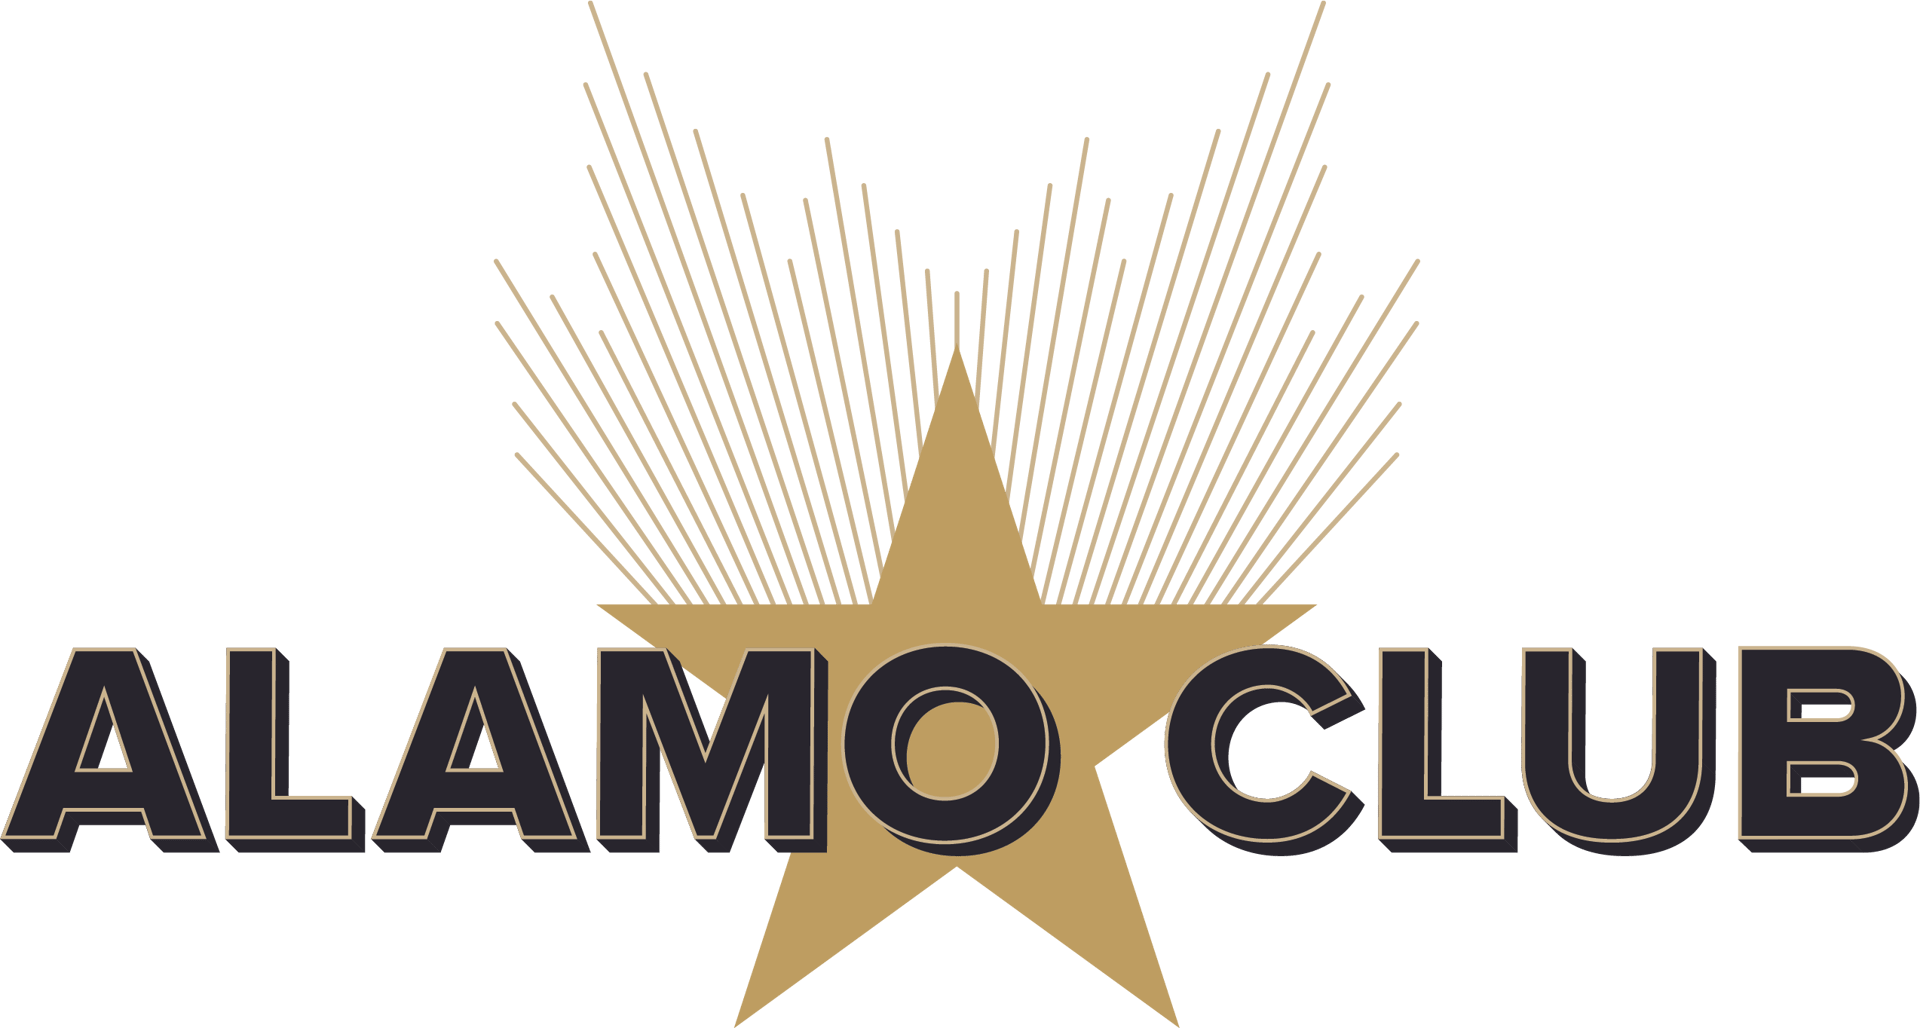 Alamo club logo